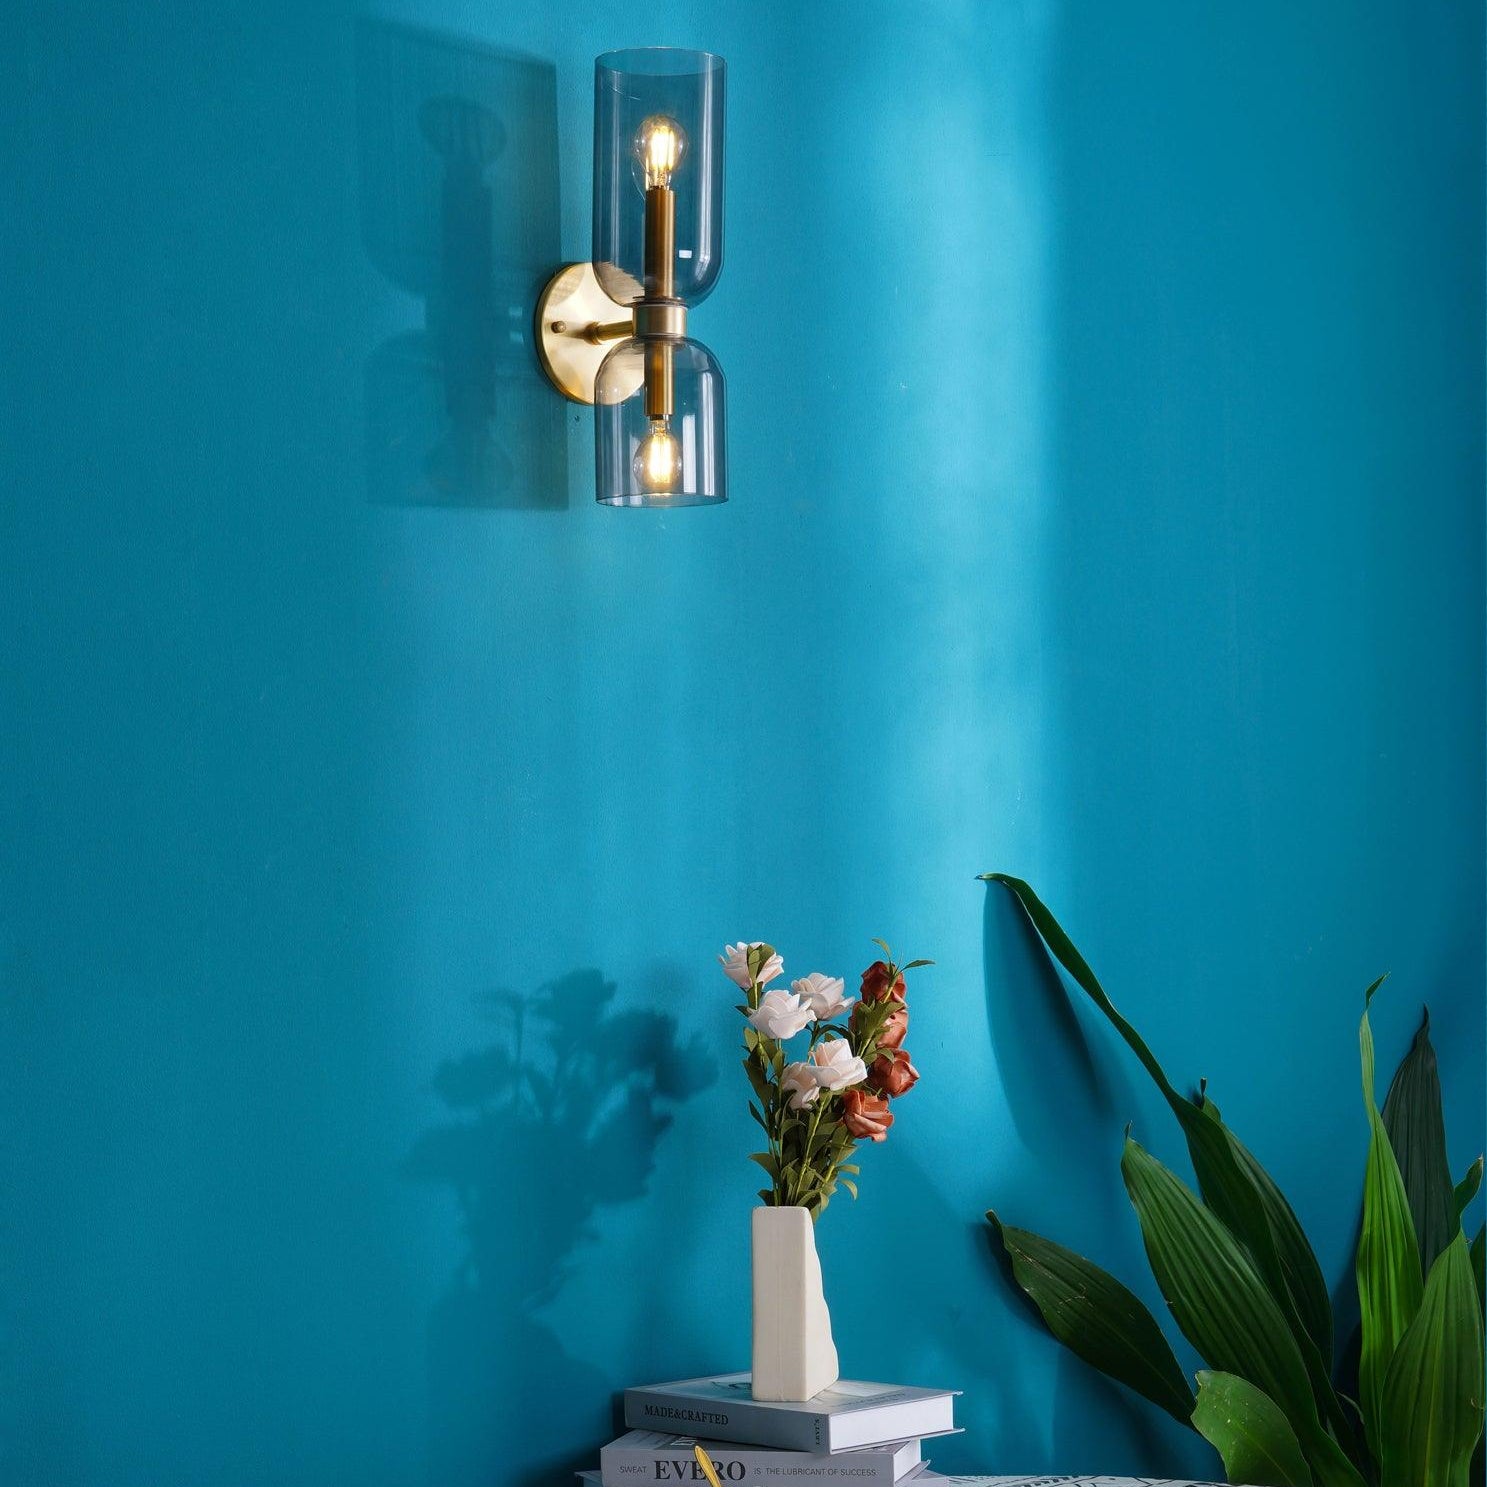 Meza Wall Lamp Simple Double-head, White/Blue/Gray/Chrome, Bedroom